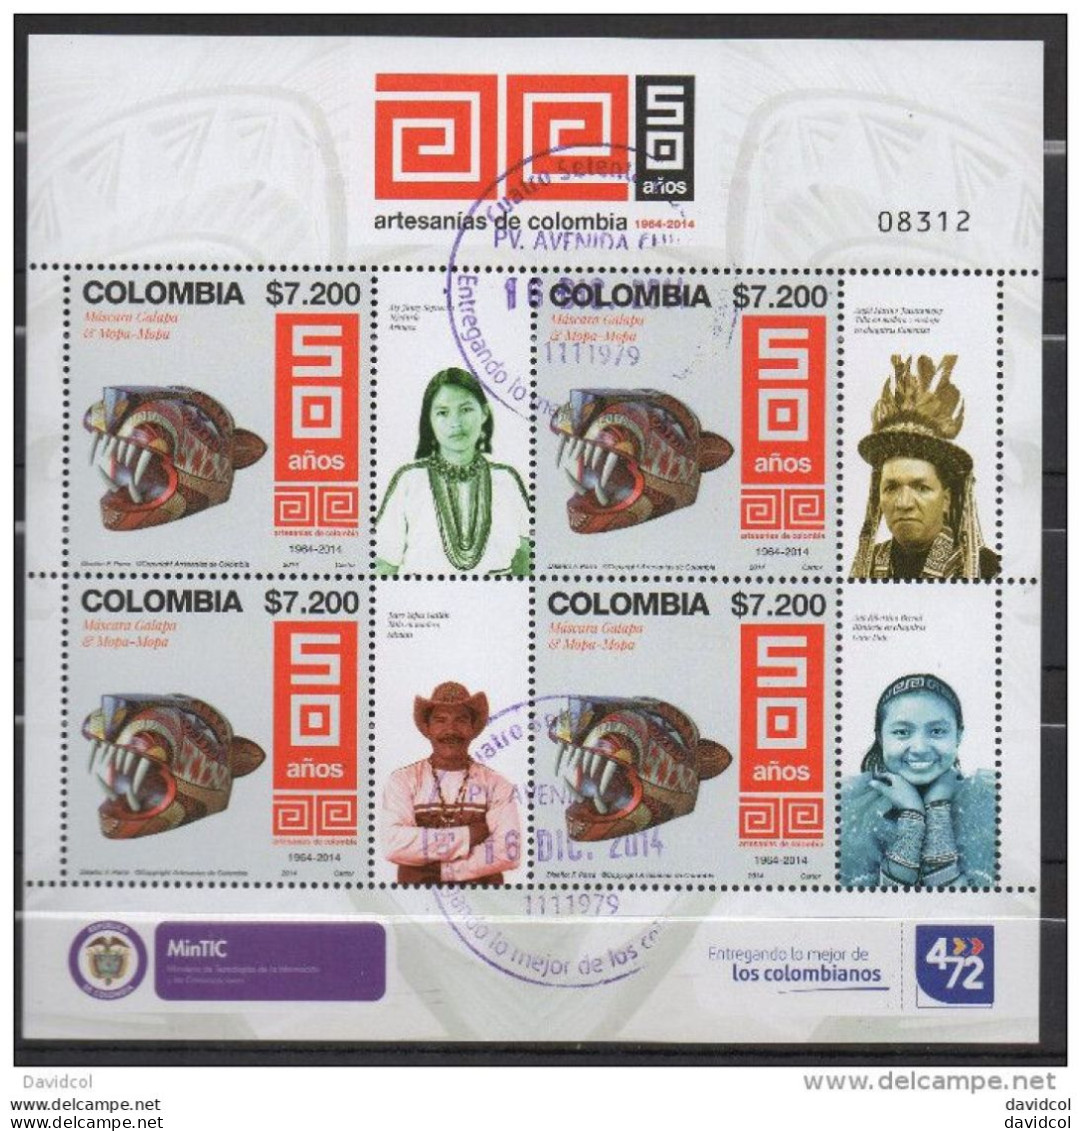 0065B-KOLUMBIEN - 2014 - "ARTESANIAS DE COLOMBIA/ COLOMBIAN HANDCRAFTS". USED SHEET. HIGH FACIAL VALUE - Colombia